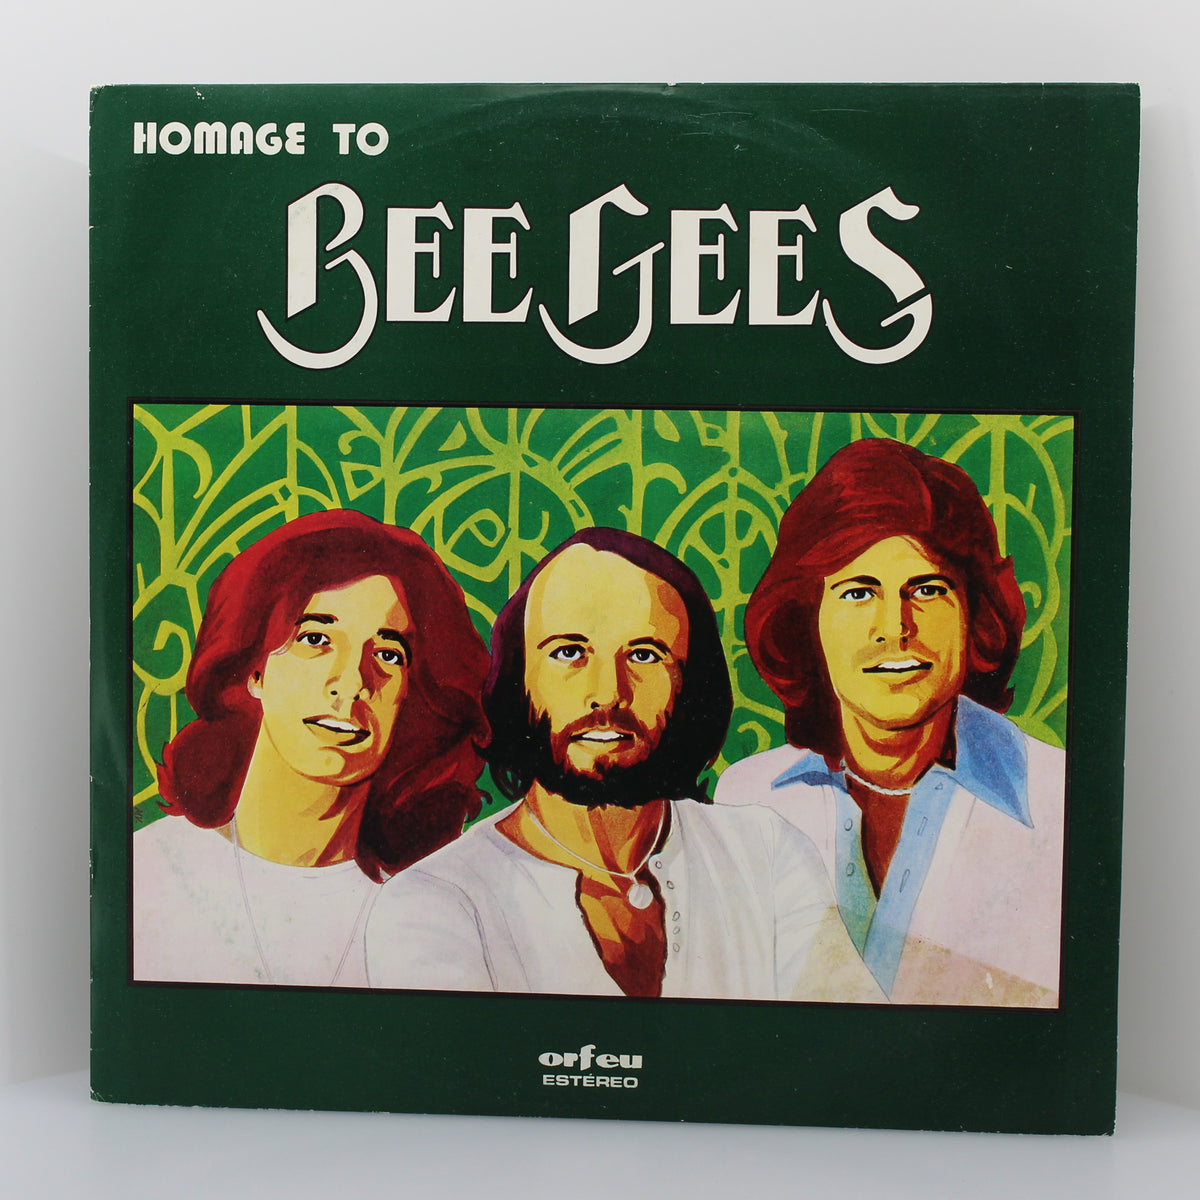 Bee Gees - Homage To, Vinyl LP 33Rpm Album, Portugal 1979